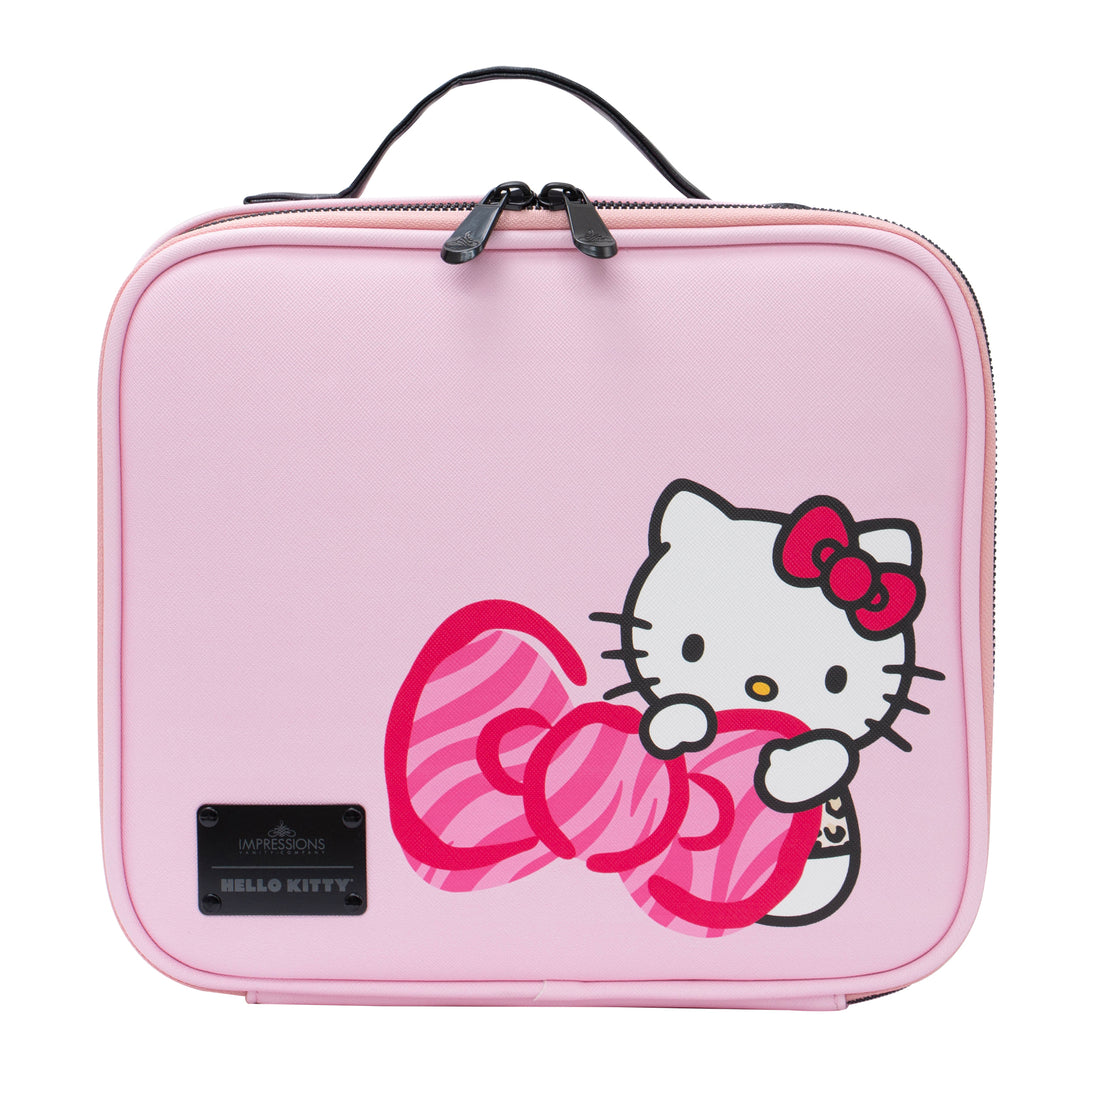 Cat Tote Bag / Shopper Bag Cat Lover Gift Aesthetic Bag 